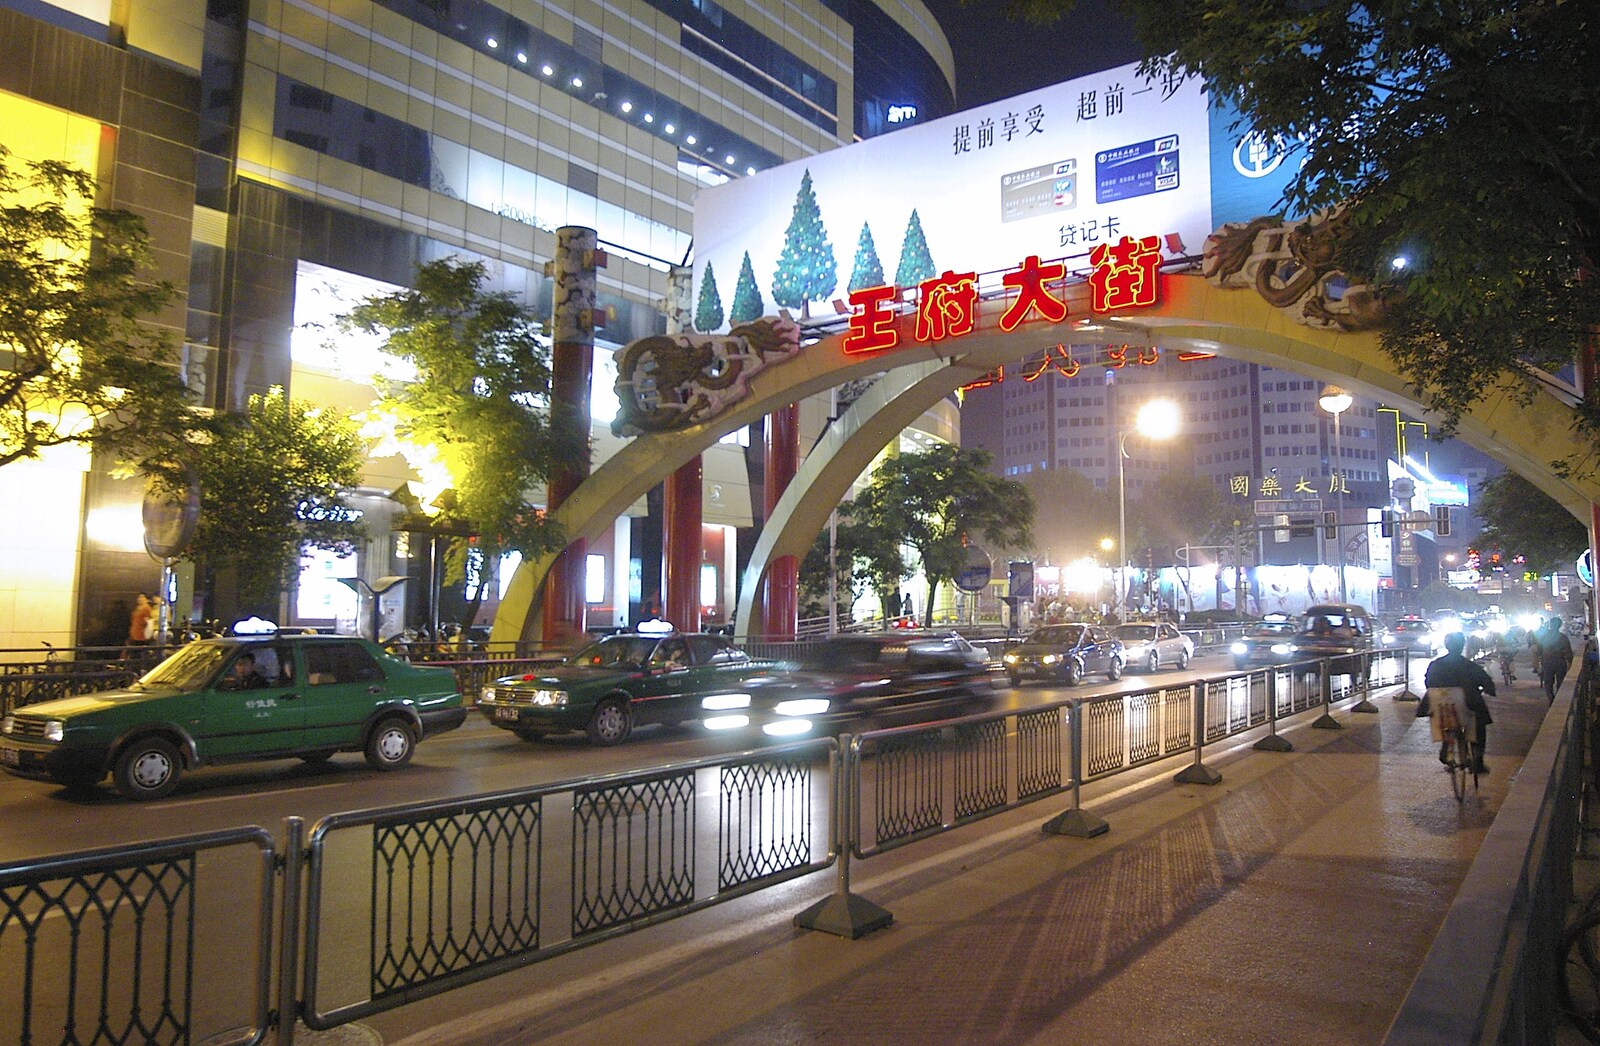 An illuminated arch, near the hotel from Nanjing by Night, Nanjing, Jiangsu Province, China - 4th October 2006